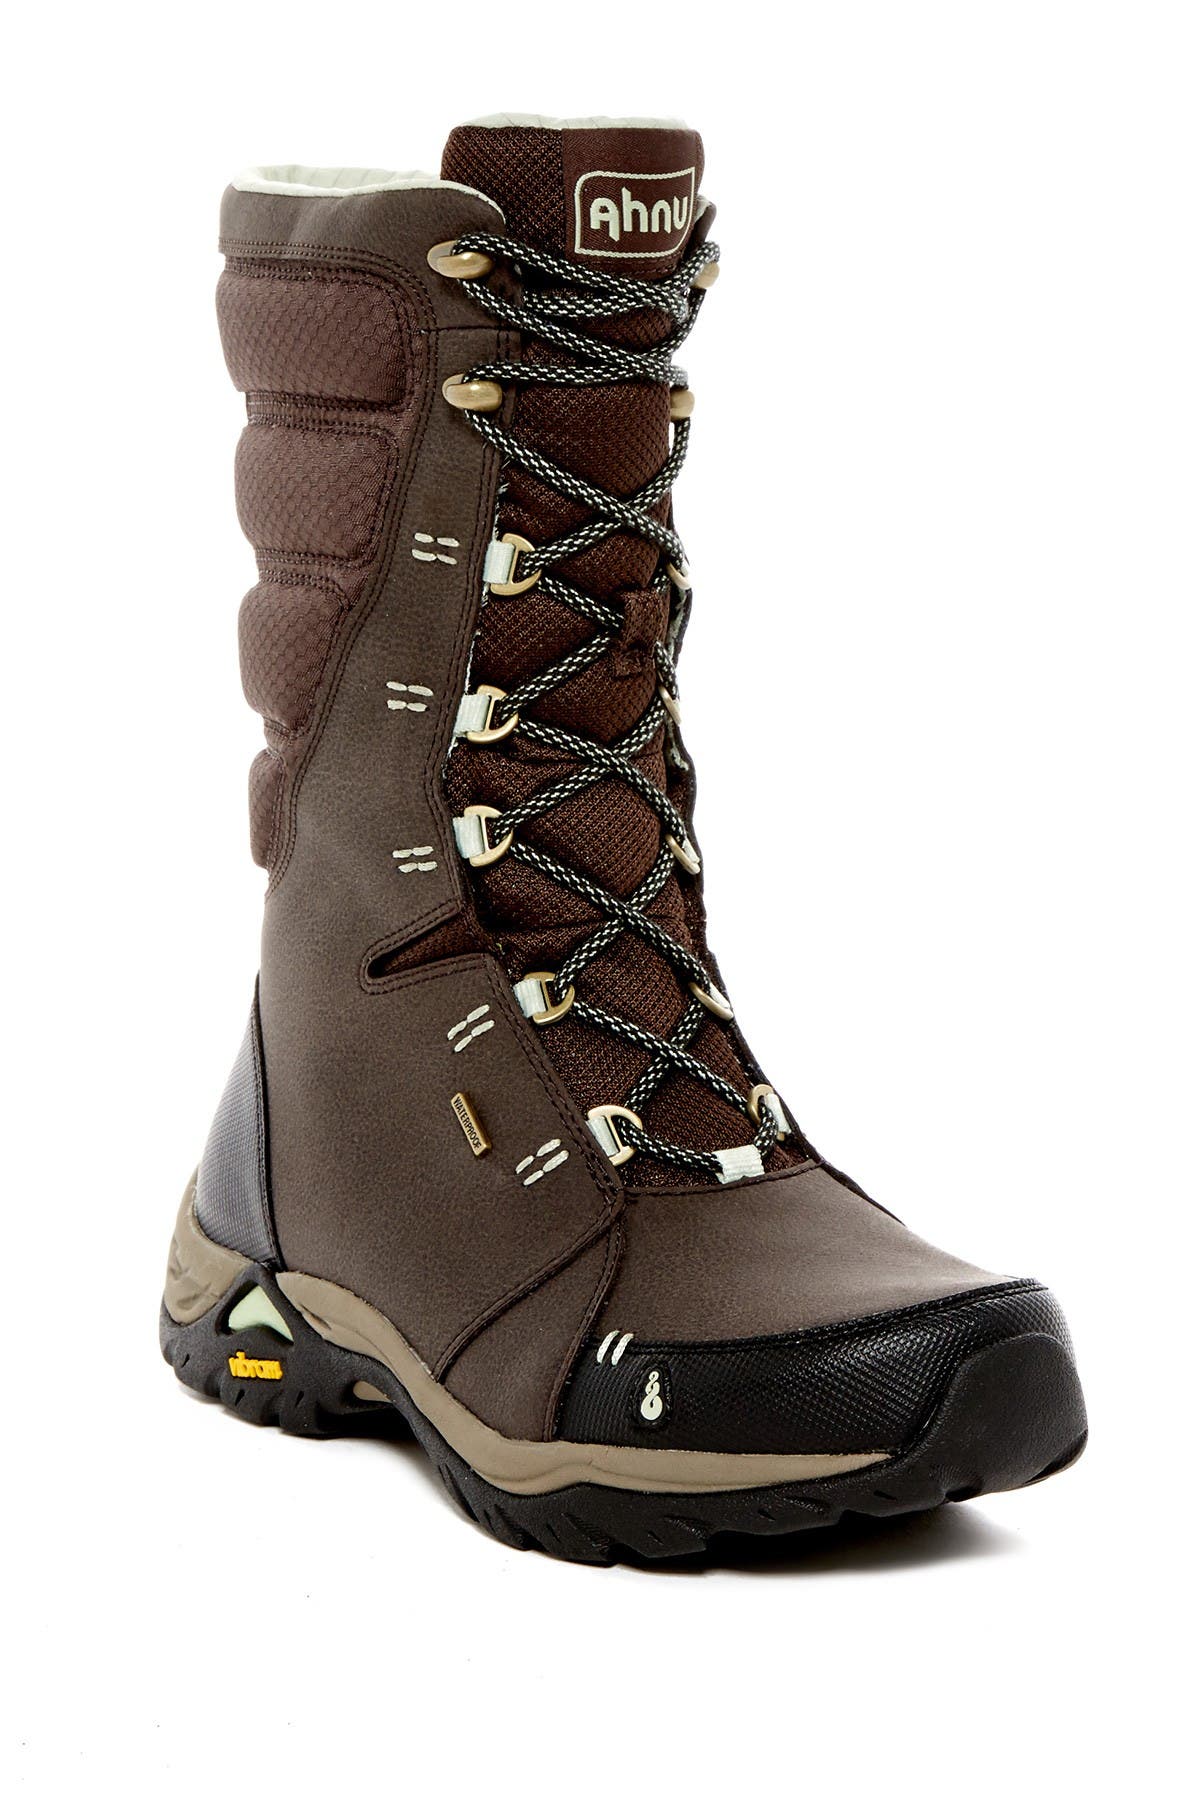 ahnu northridge snow boots